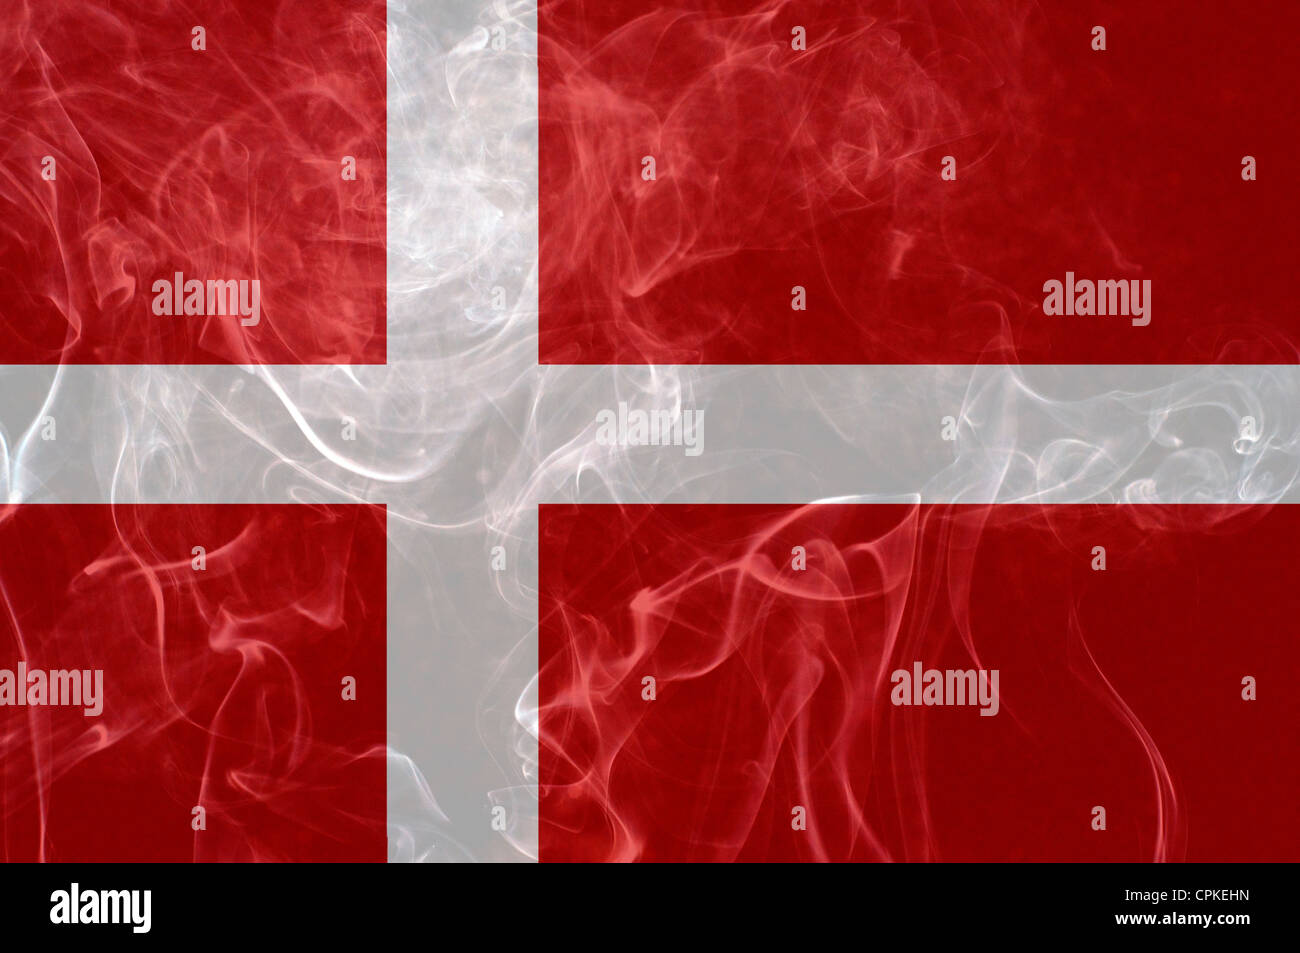 Denmark flag overlay on smoke technique. Stock Photo